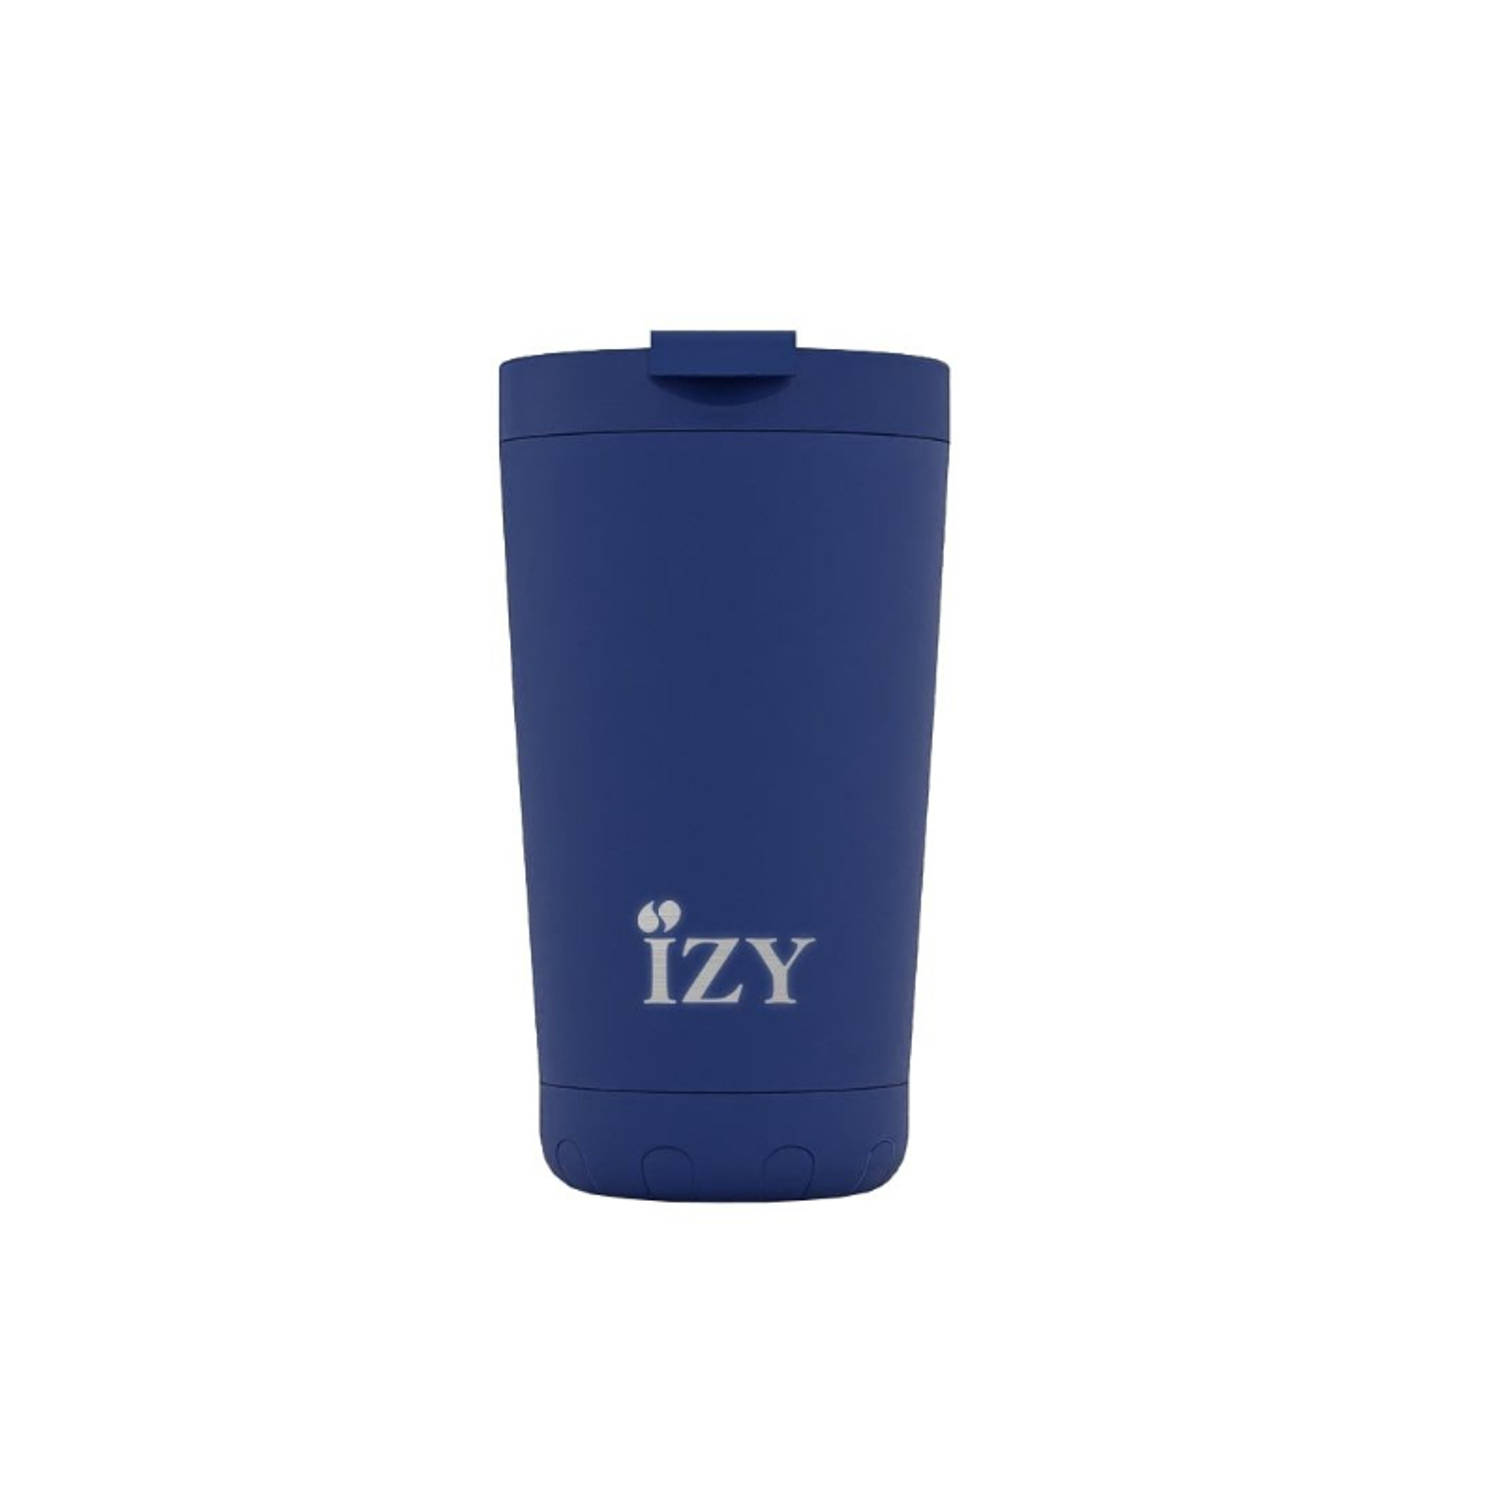 IZY x Blauw Thermosbeker - Koffiebeker to go - 350 ml - Drinkbeker RVS - Travel Mug - Reisbeker